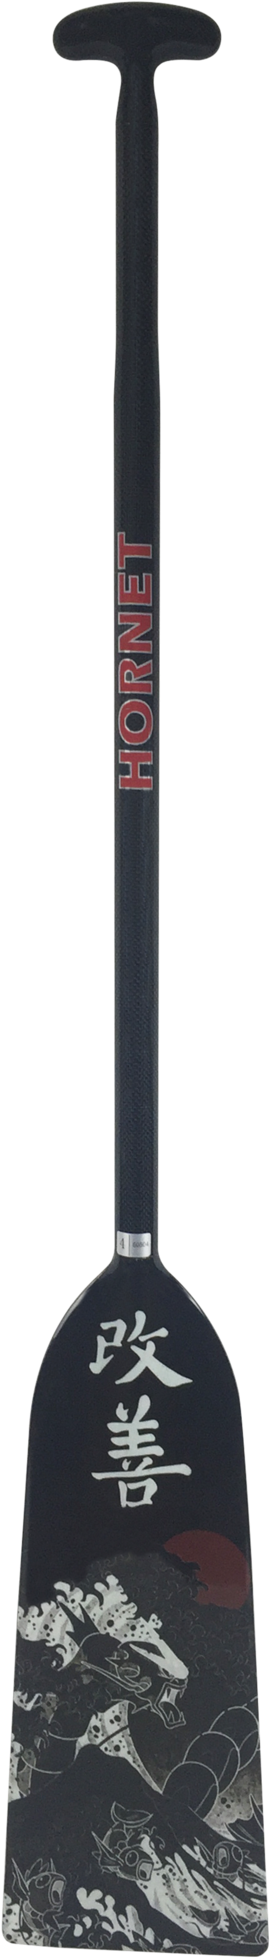 A Black Pole With A White Light